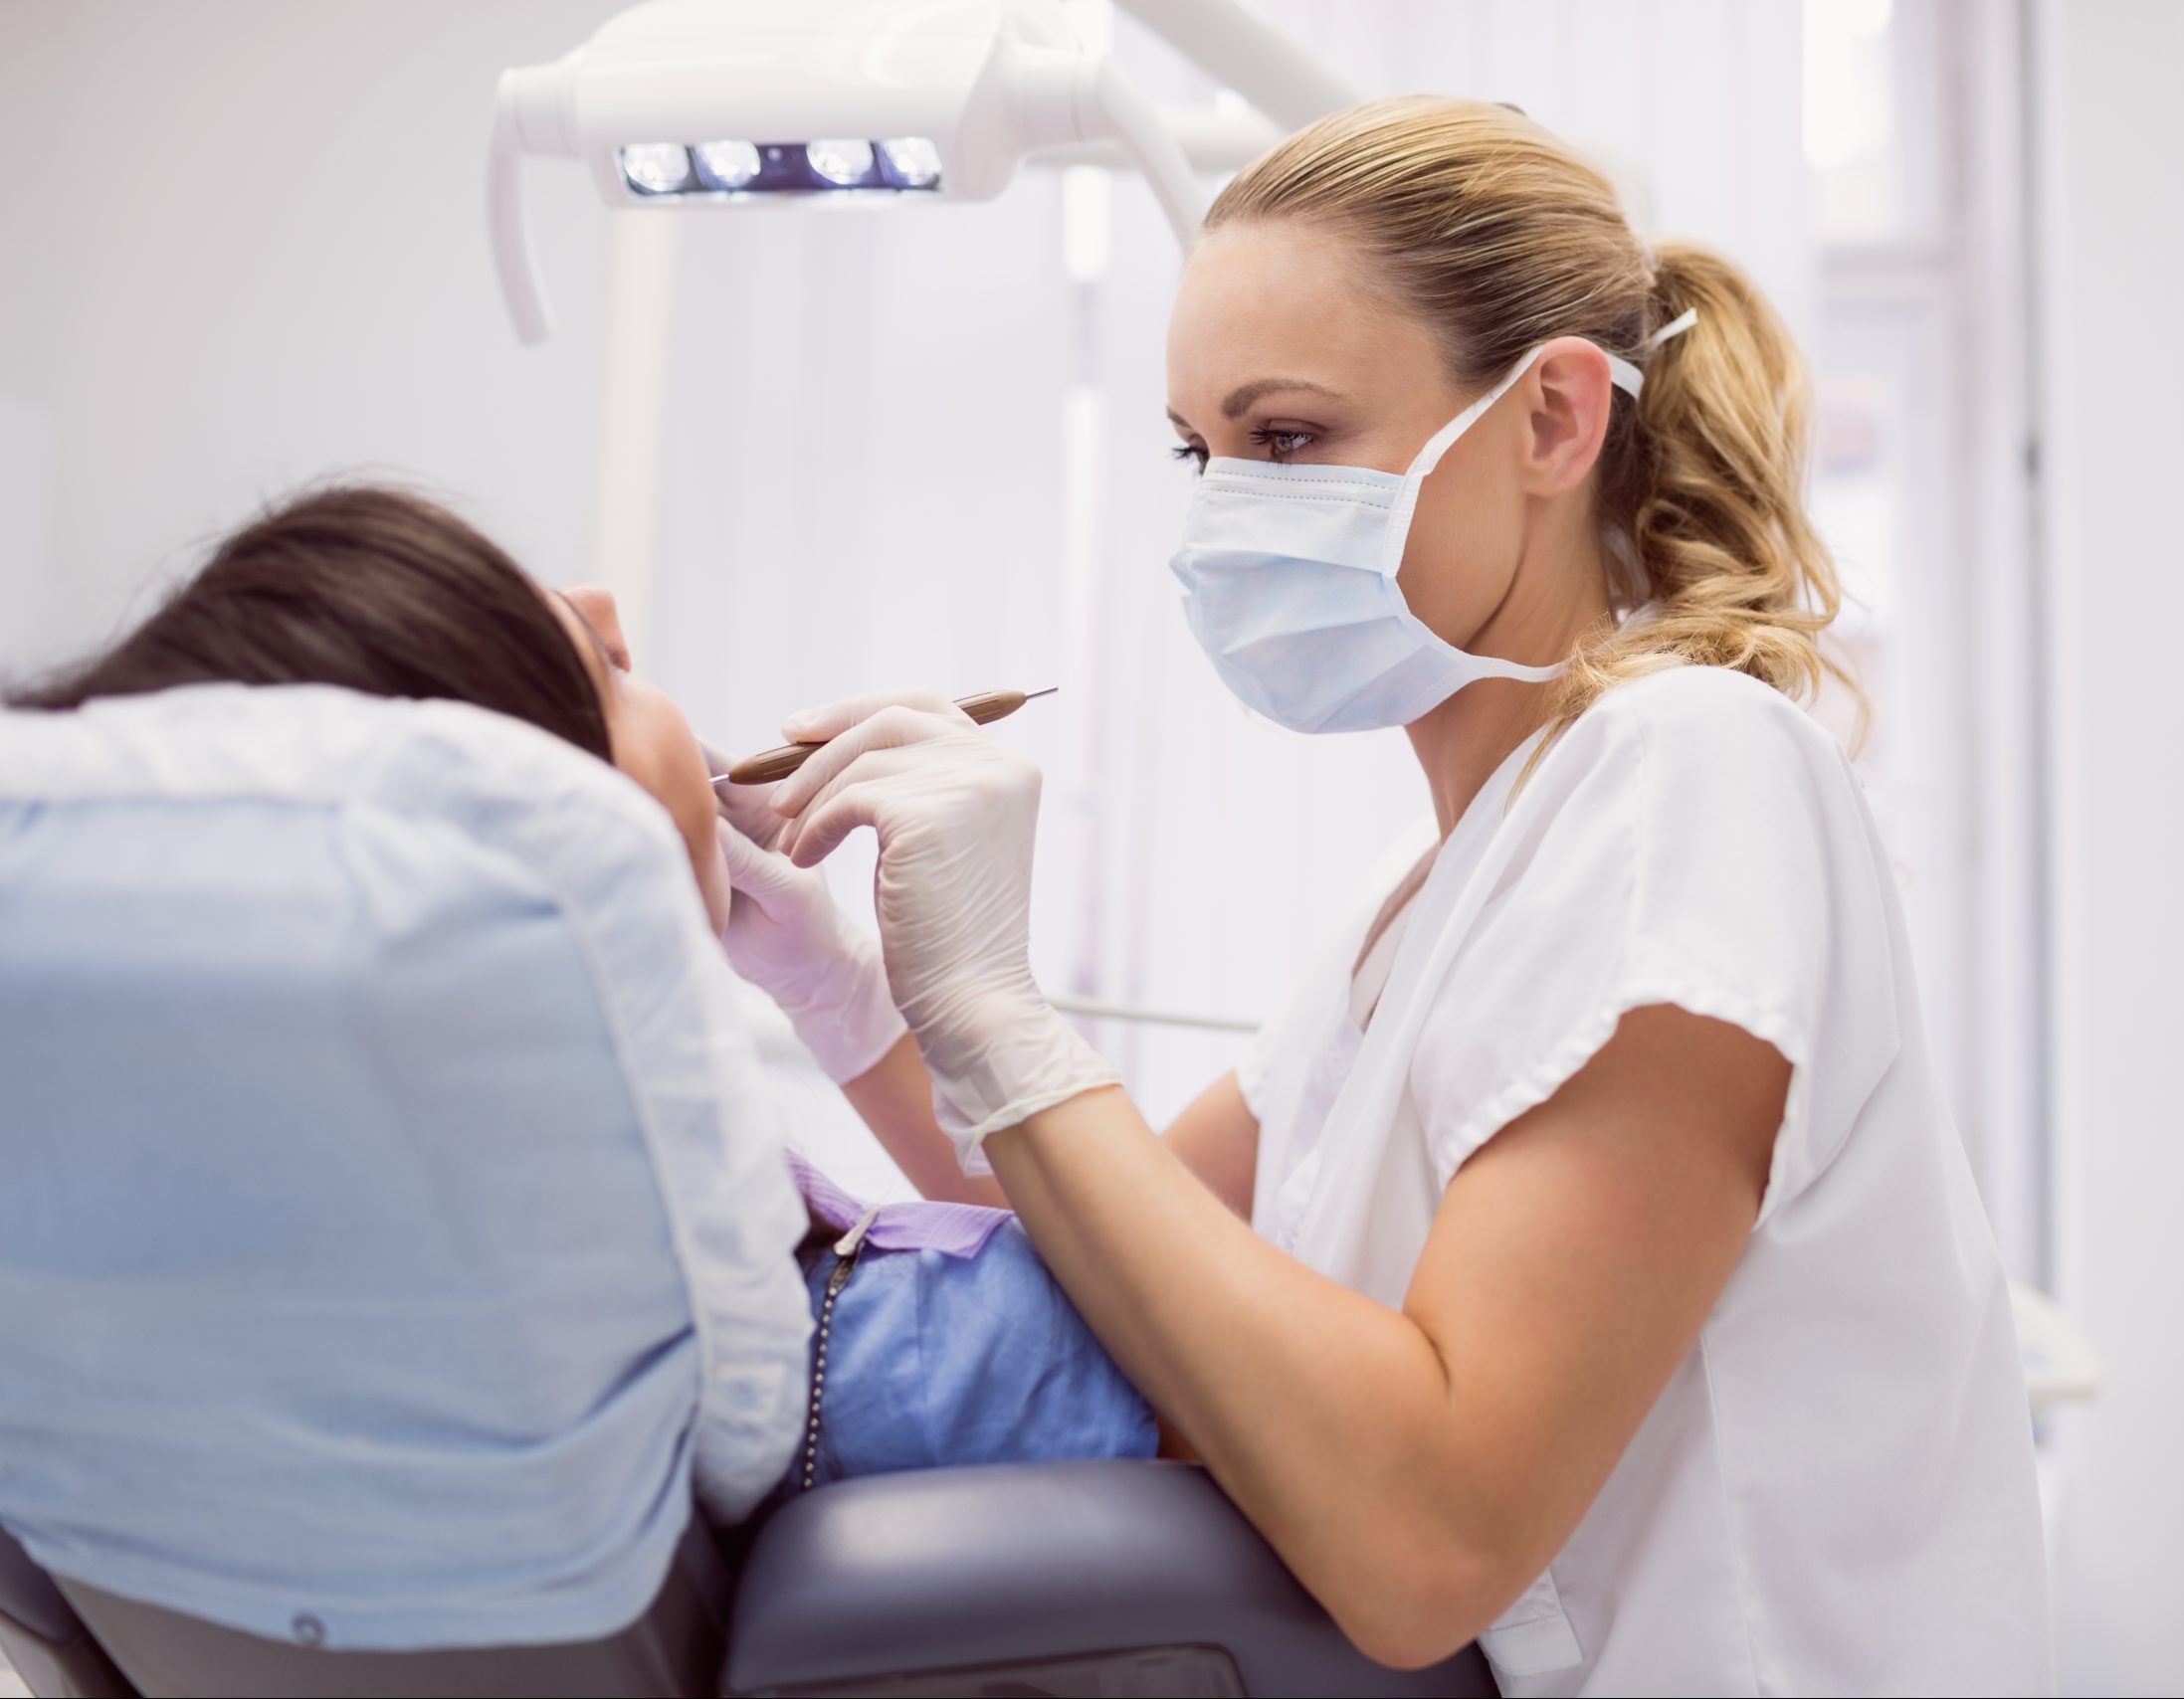 https://www.opti-hc.de/wp-content/uploads/2022/02/dentist-examining-female-patient-scaled-e1645704775321.jpg